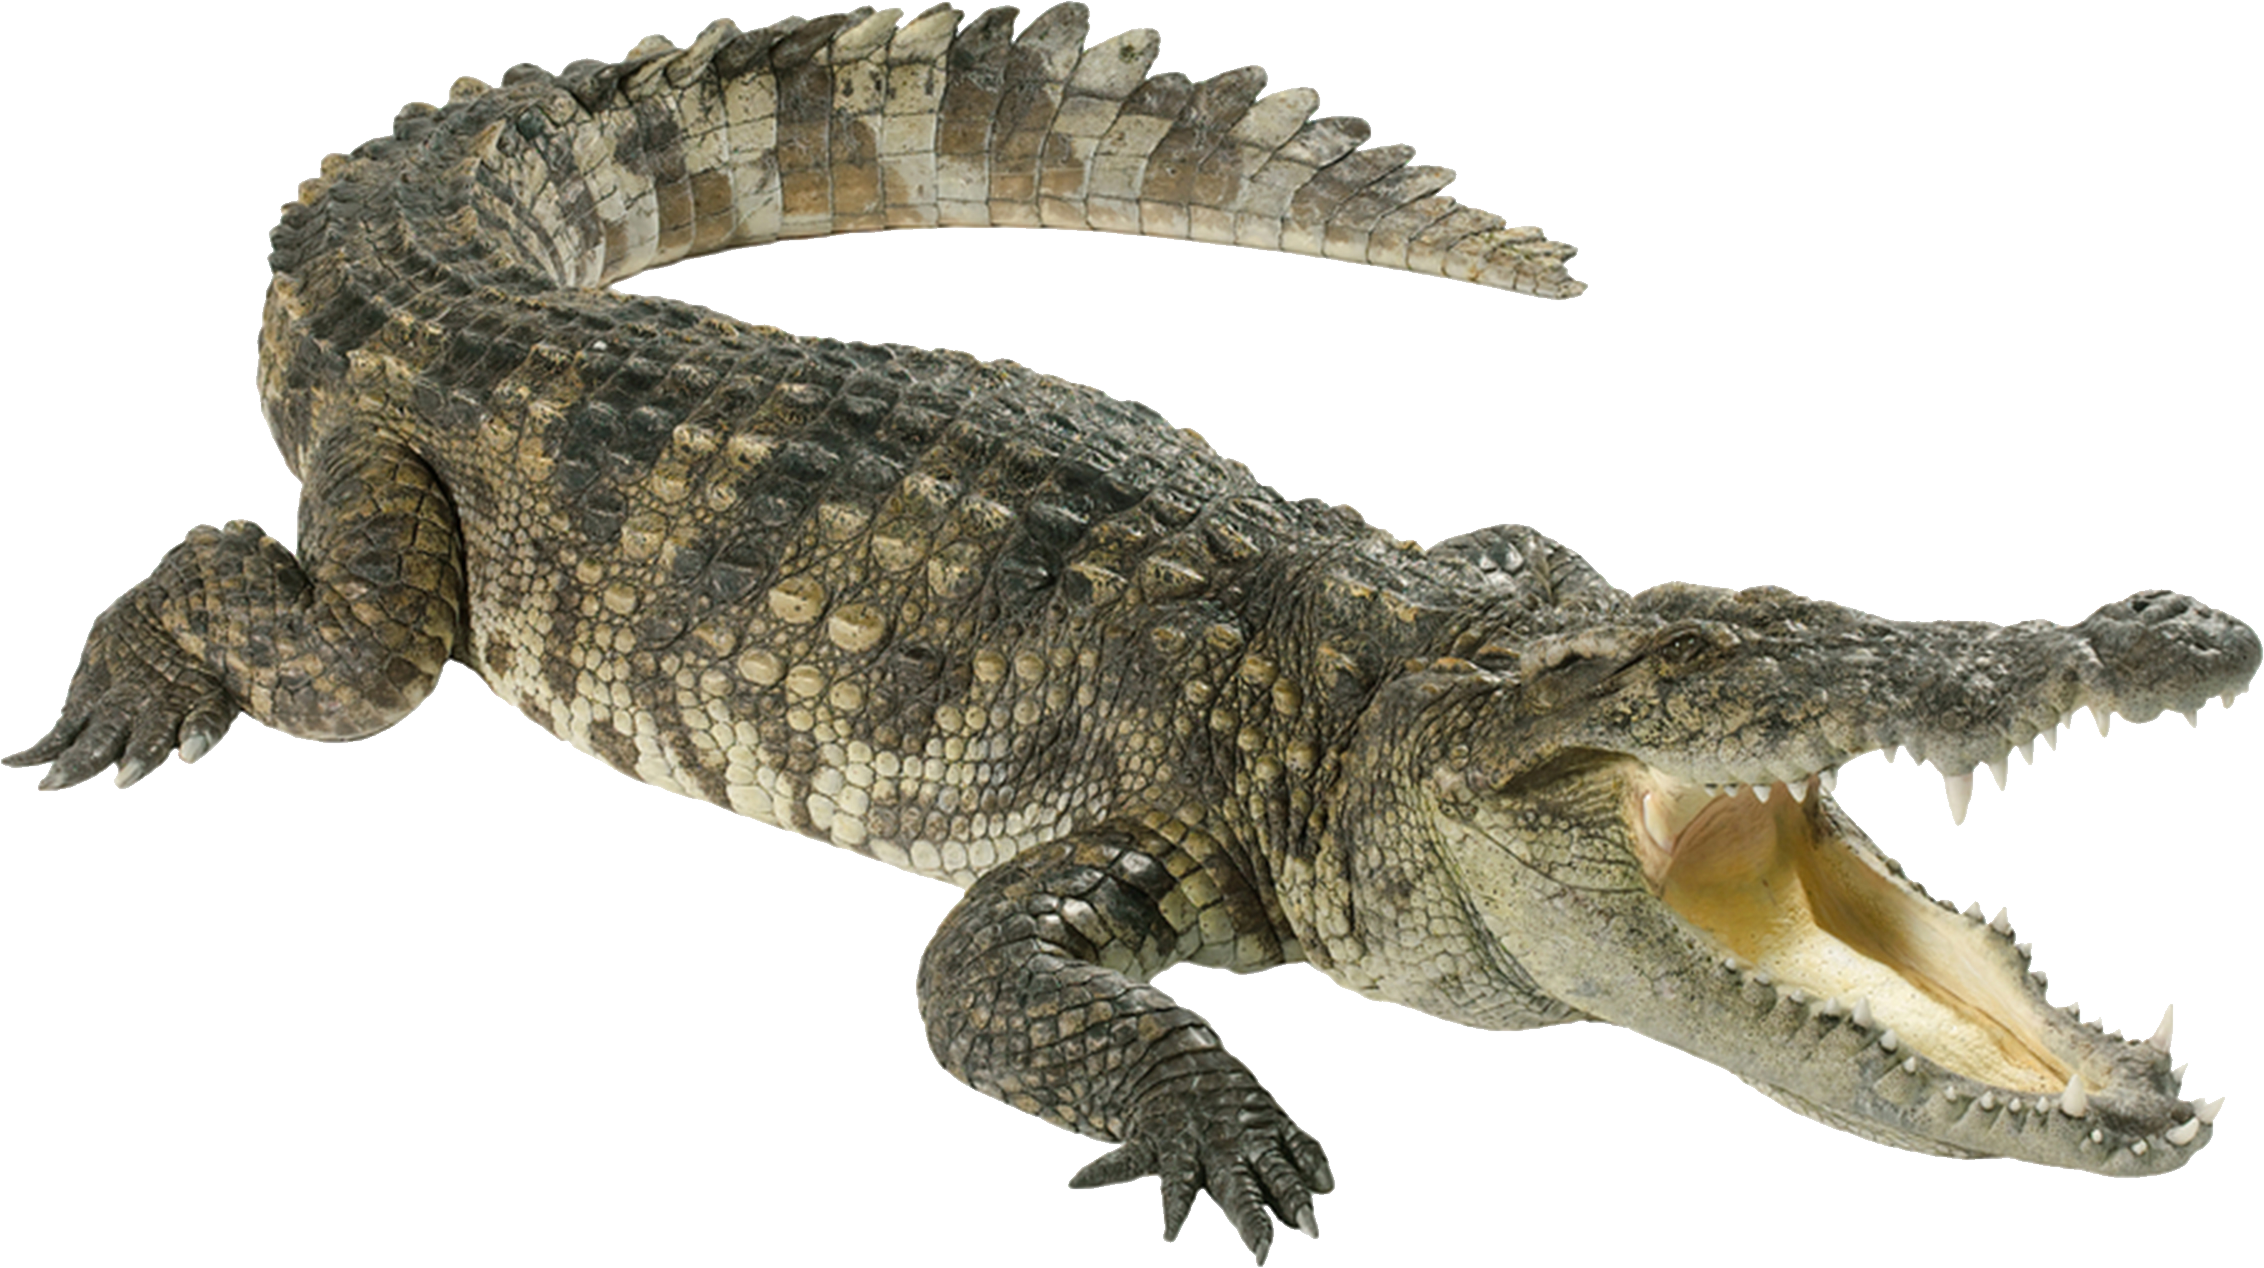 Green Crocodile